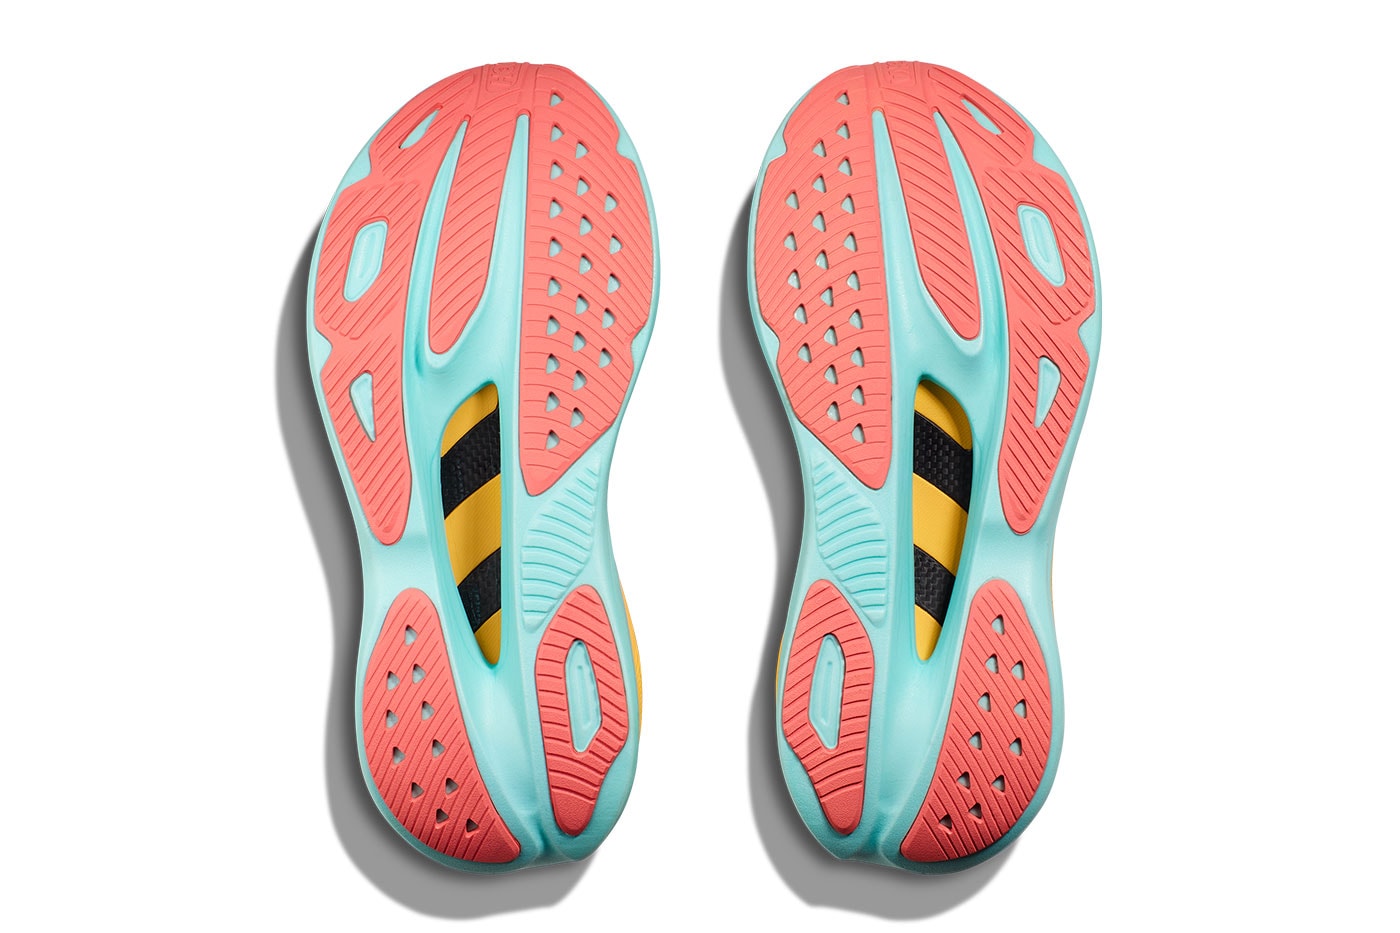 HOKA Skyward X New Running Shoe Release Info